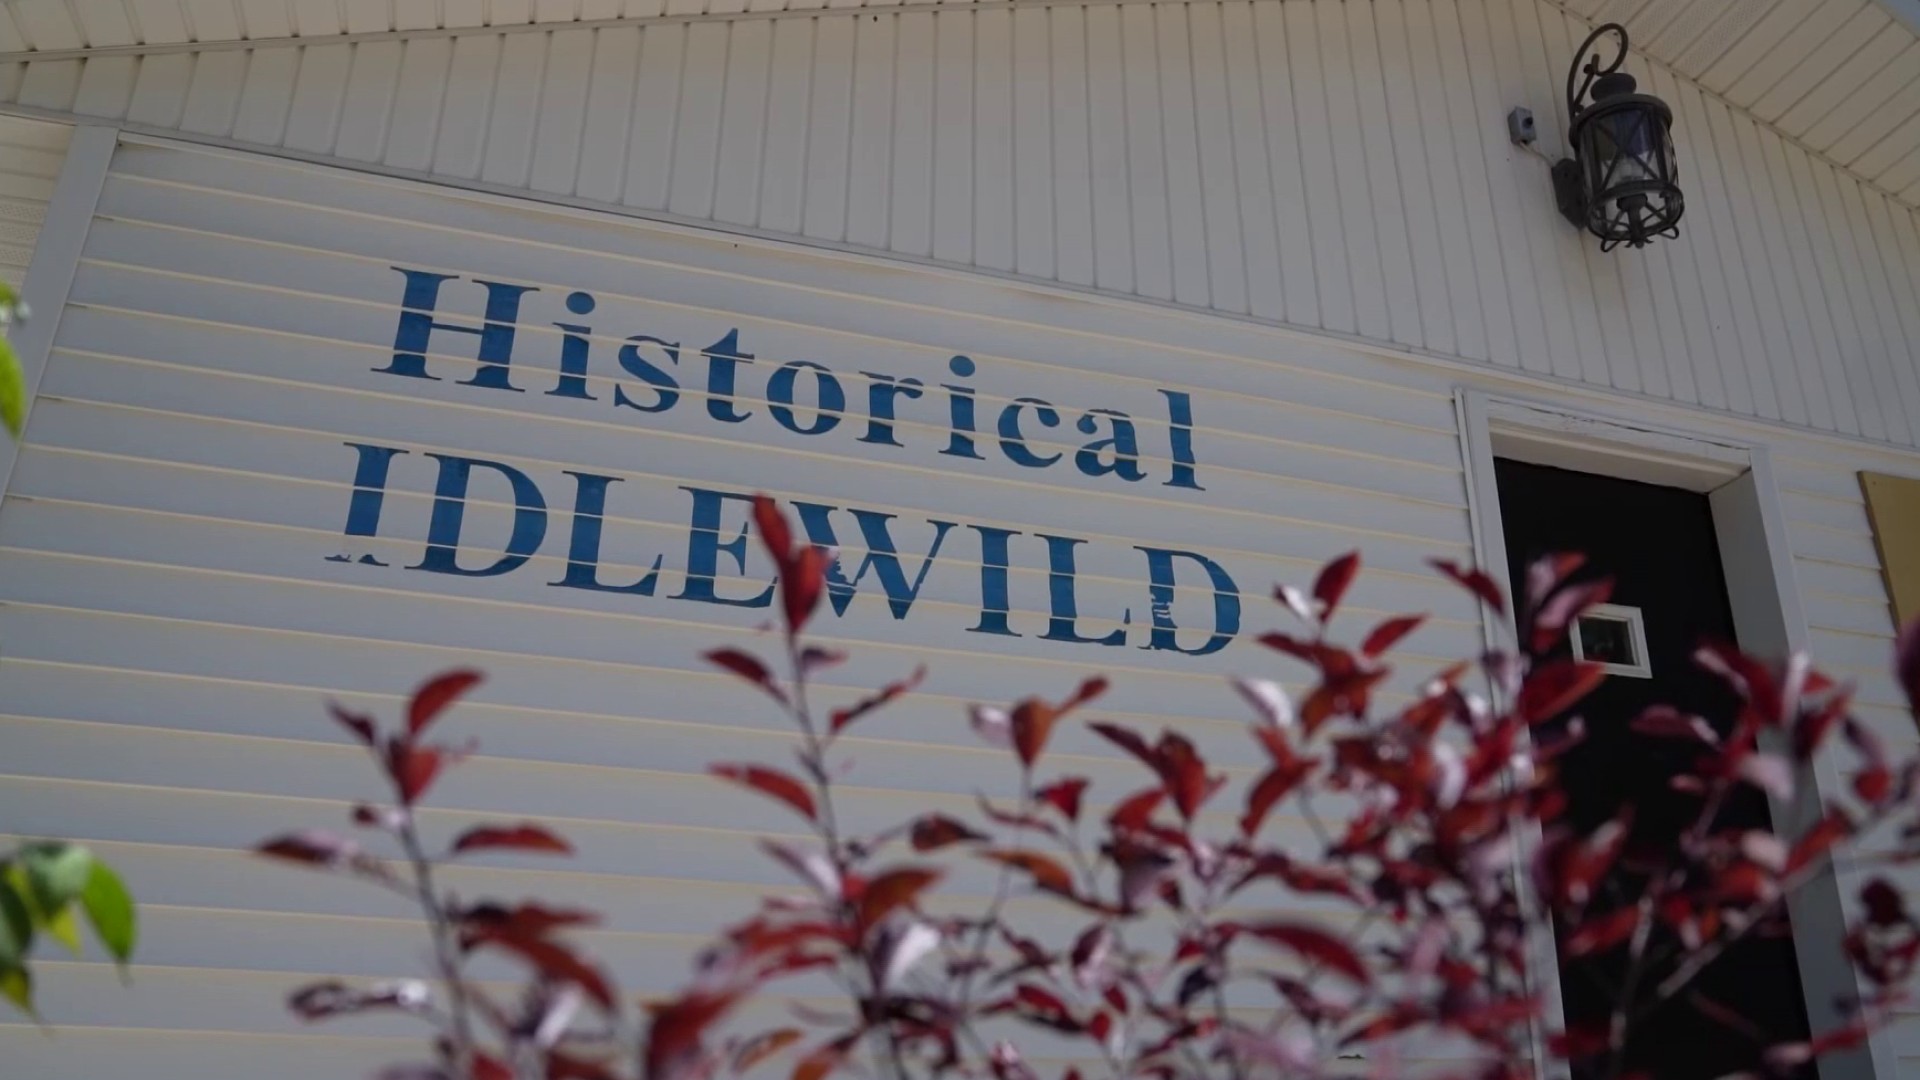 Michigan's 'Black Eden': A short history of Idlewild